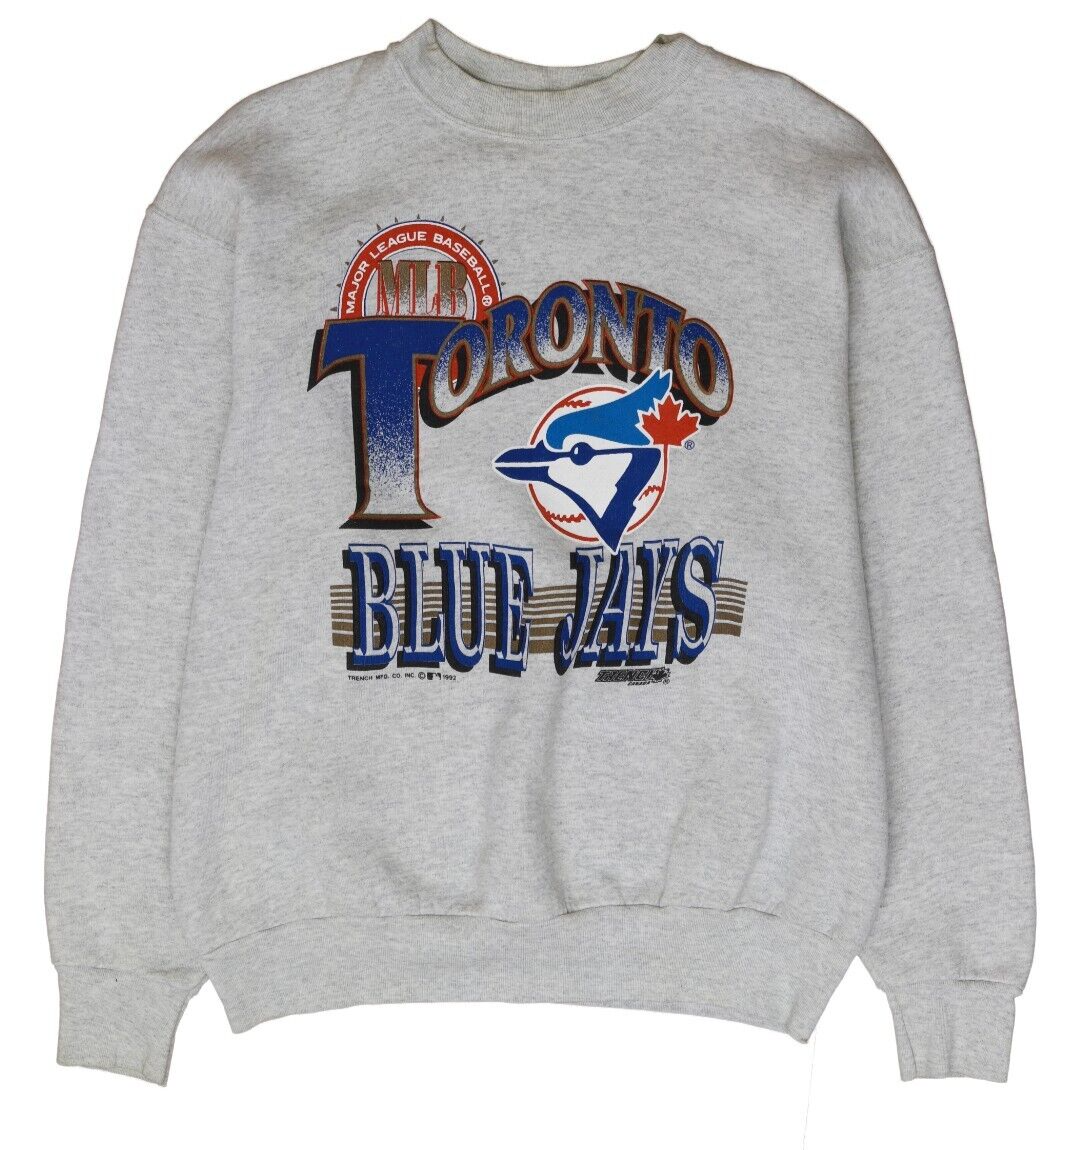 Vintage Toronto Blue Jays Crewneck Sweatshirt Size XL 1992 90s MLB